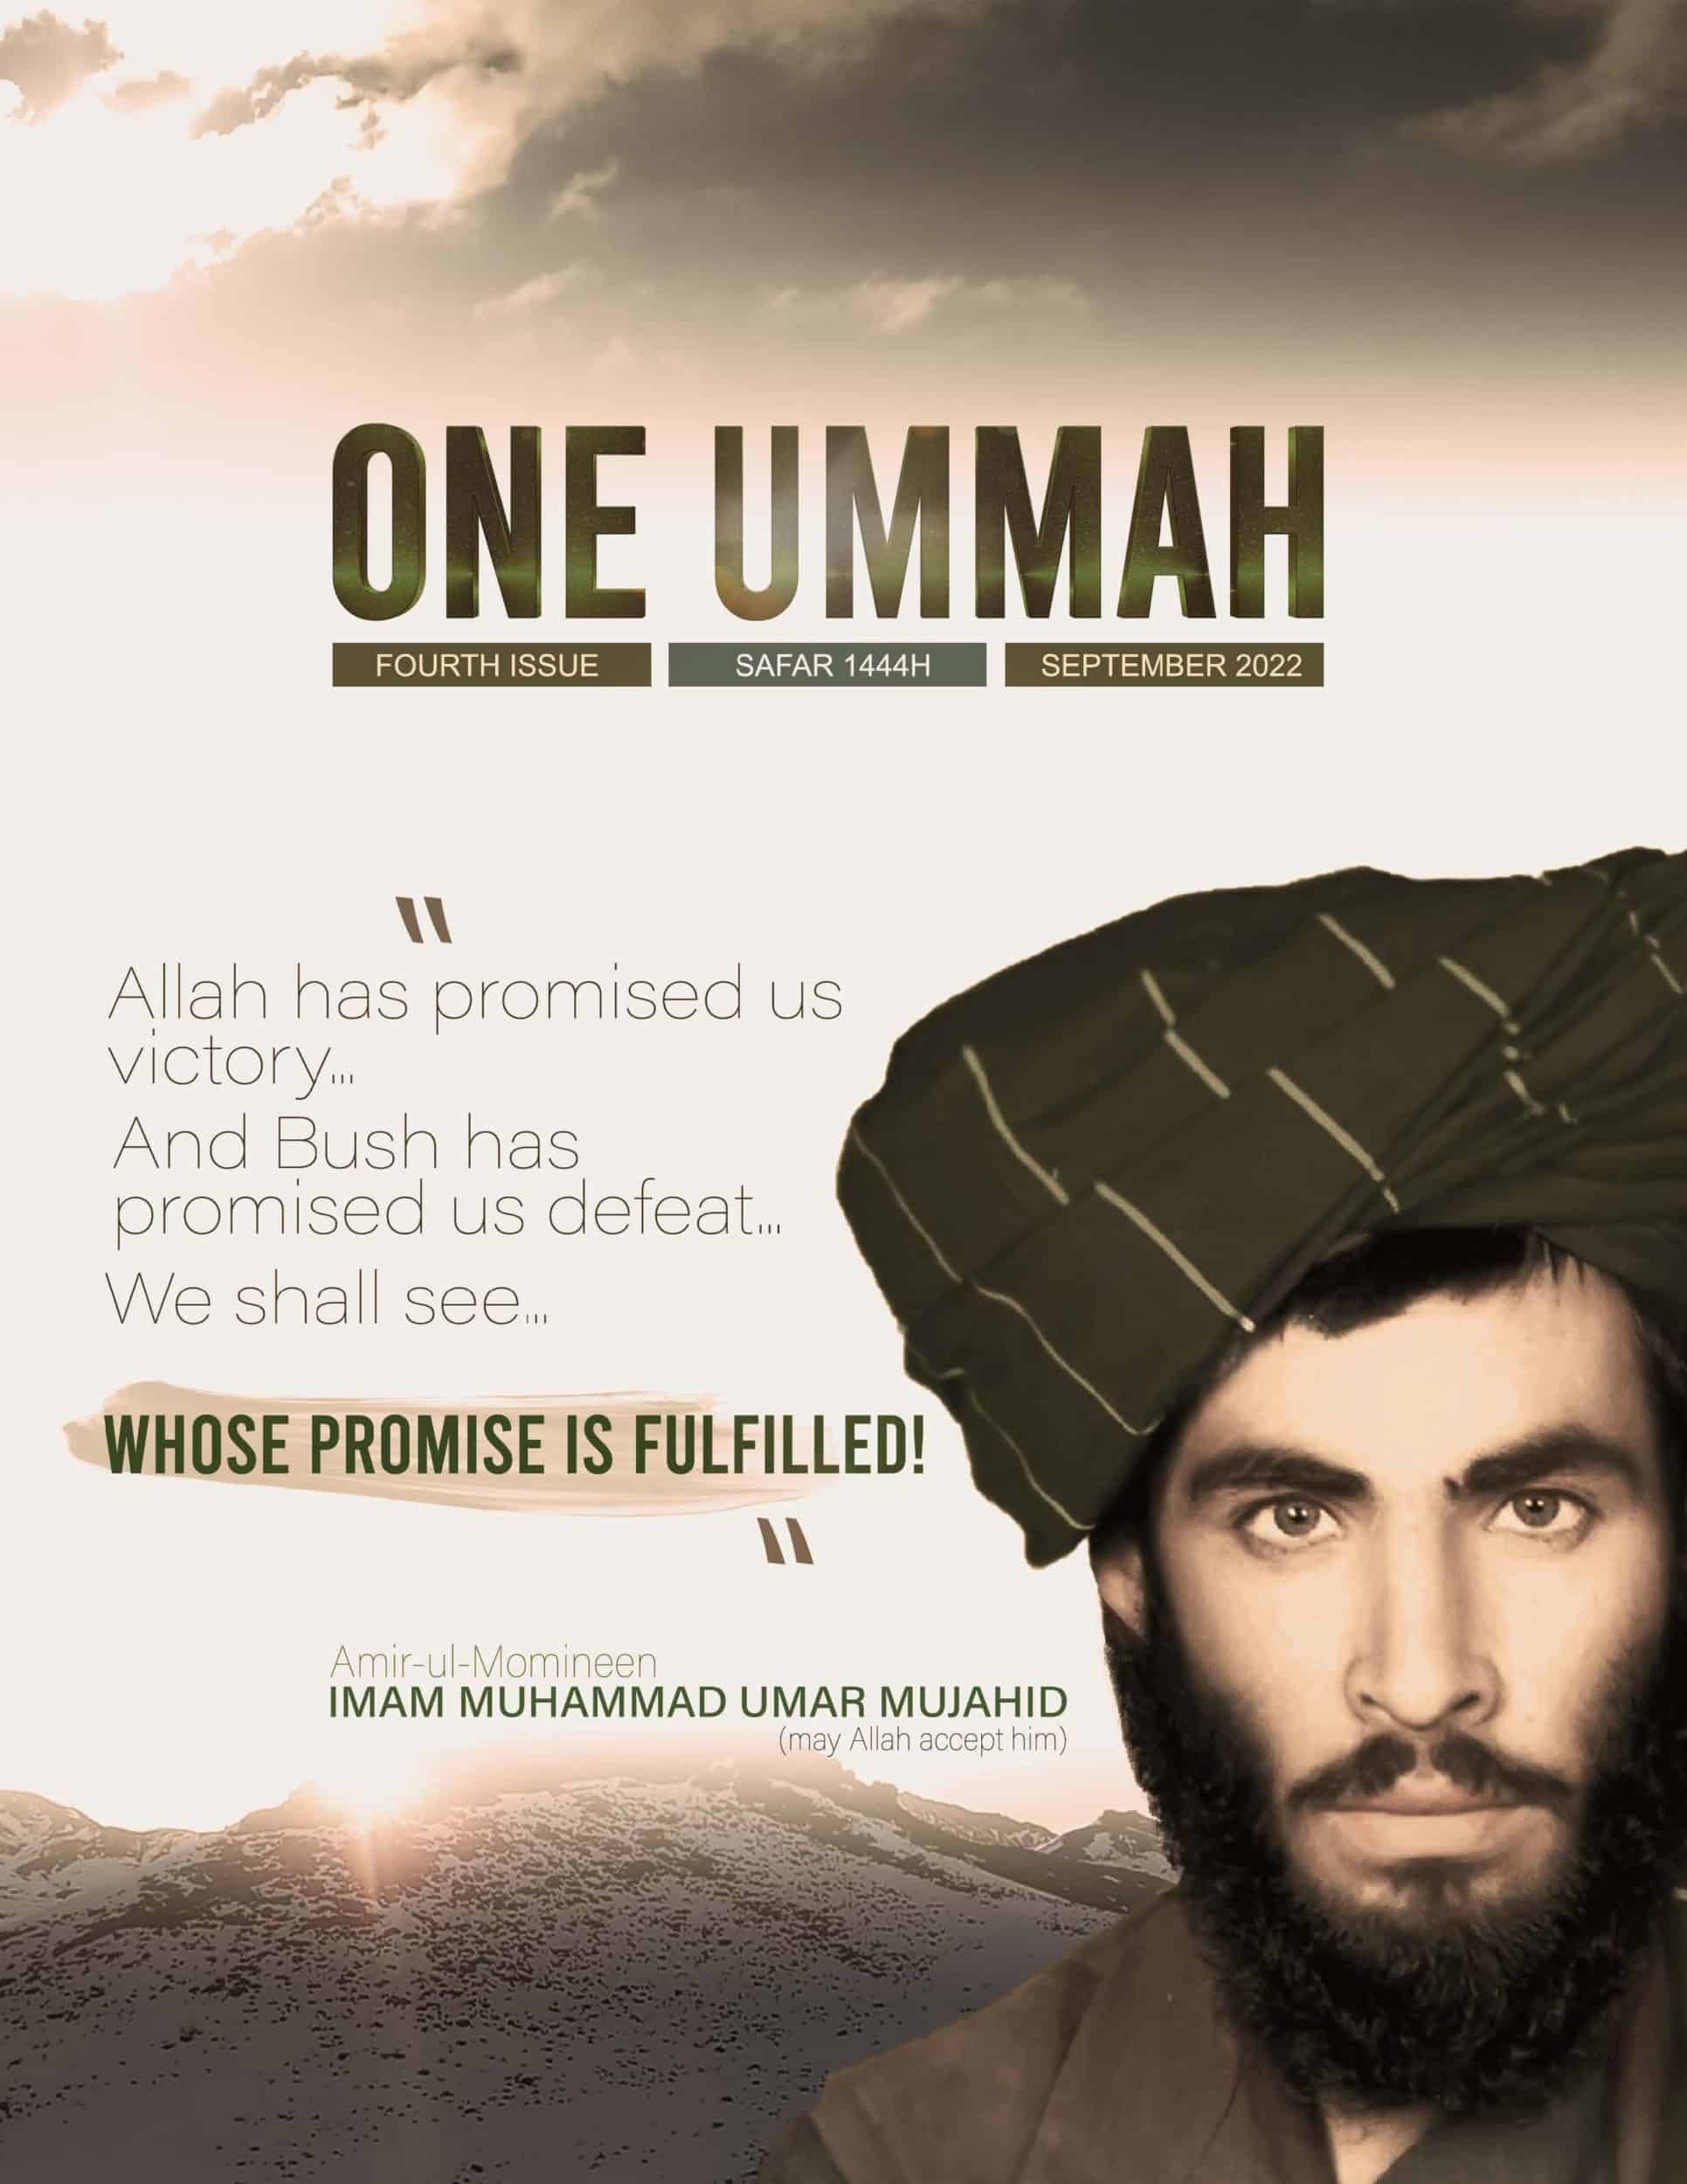 (PDF) al-Sahab Media (al-Qaeda Central Command / AQC): One Ummah #4 - 11 September 2022